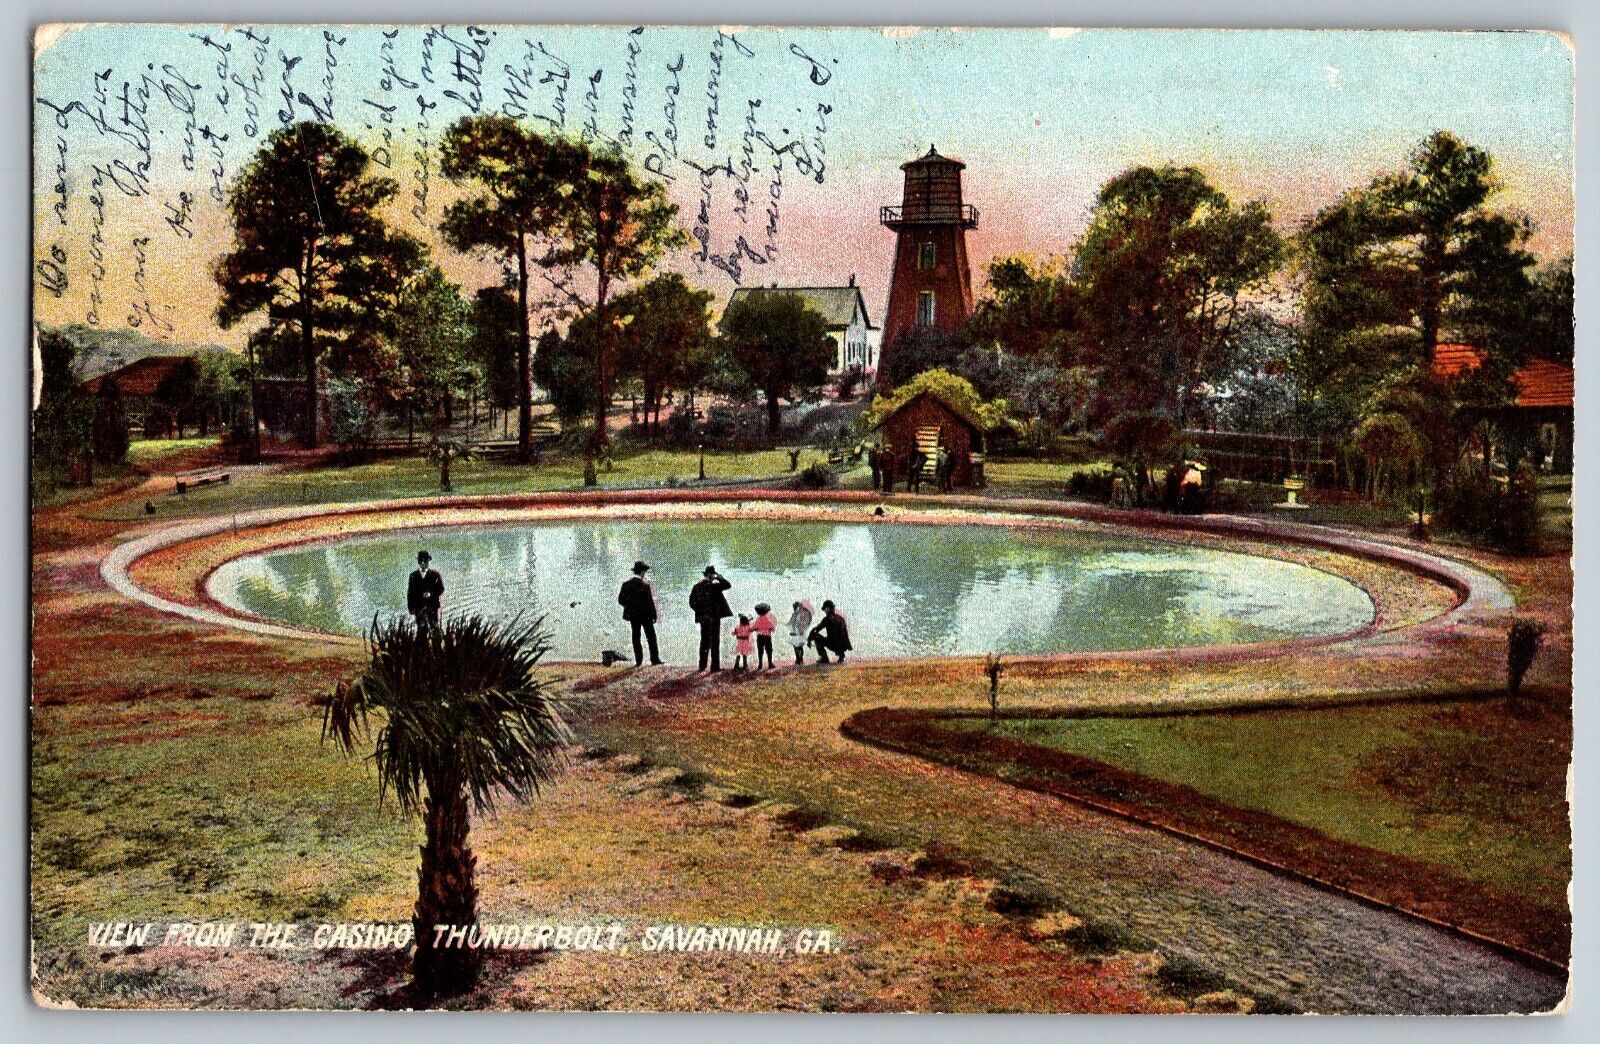 Savannah, Georgia - Thunderbolt - View from the Casino - Vintage Postcard